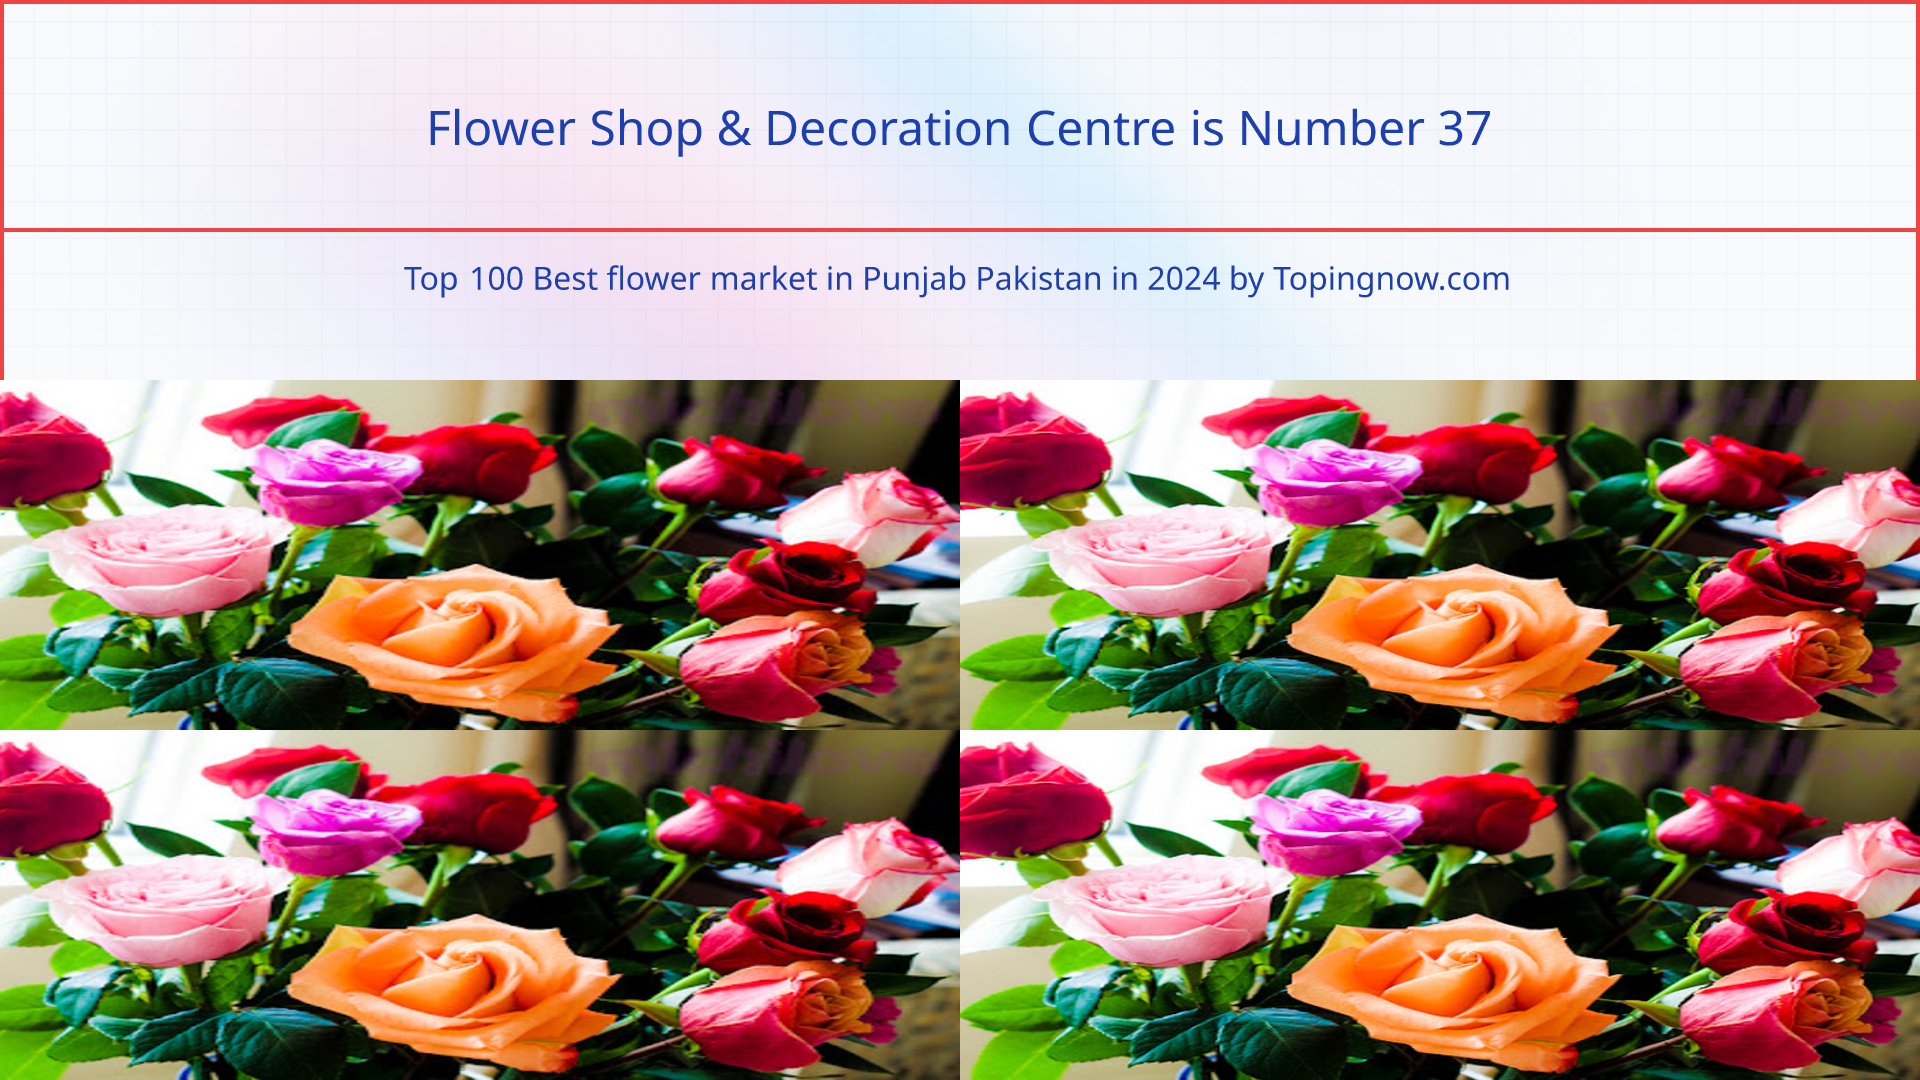 Flower Shop & Decoration Centre: Top 100 Best flower market in Punjab Pakistan in 2024